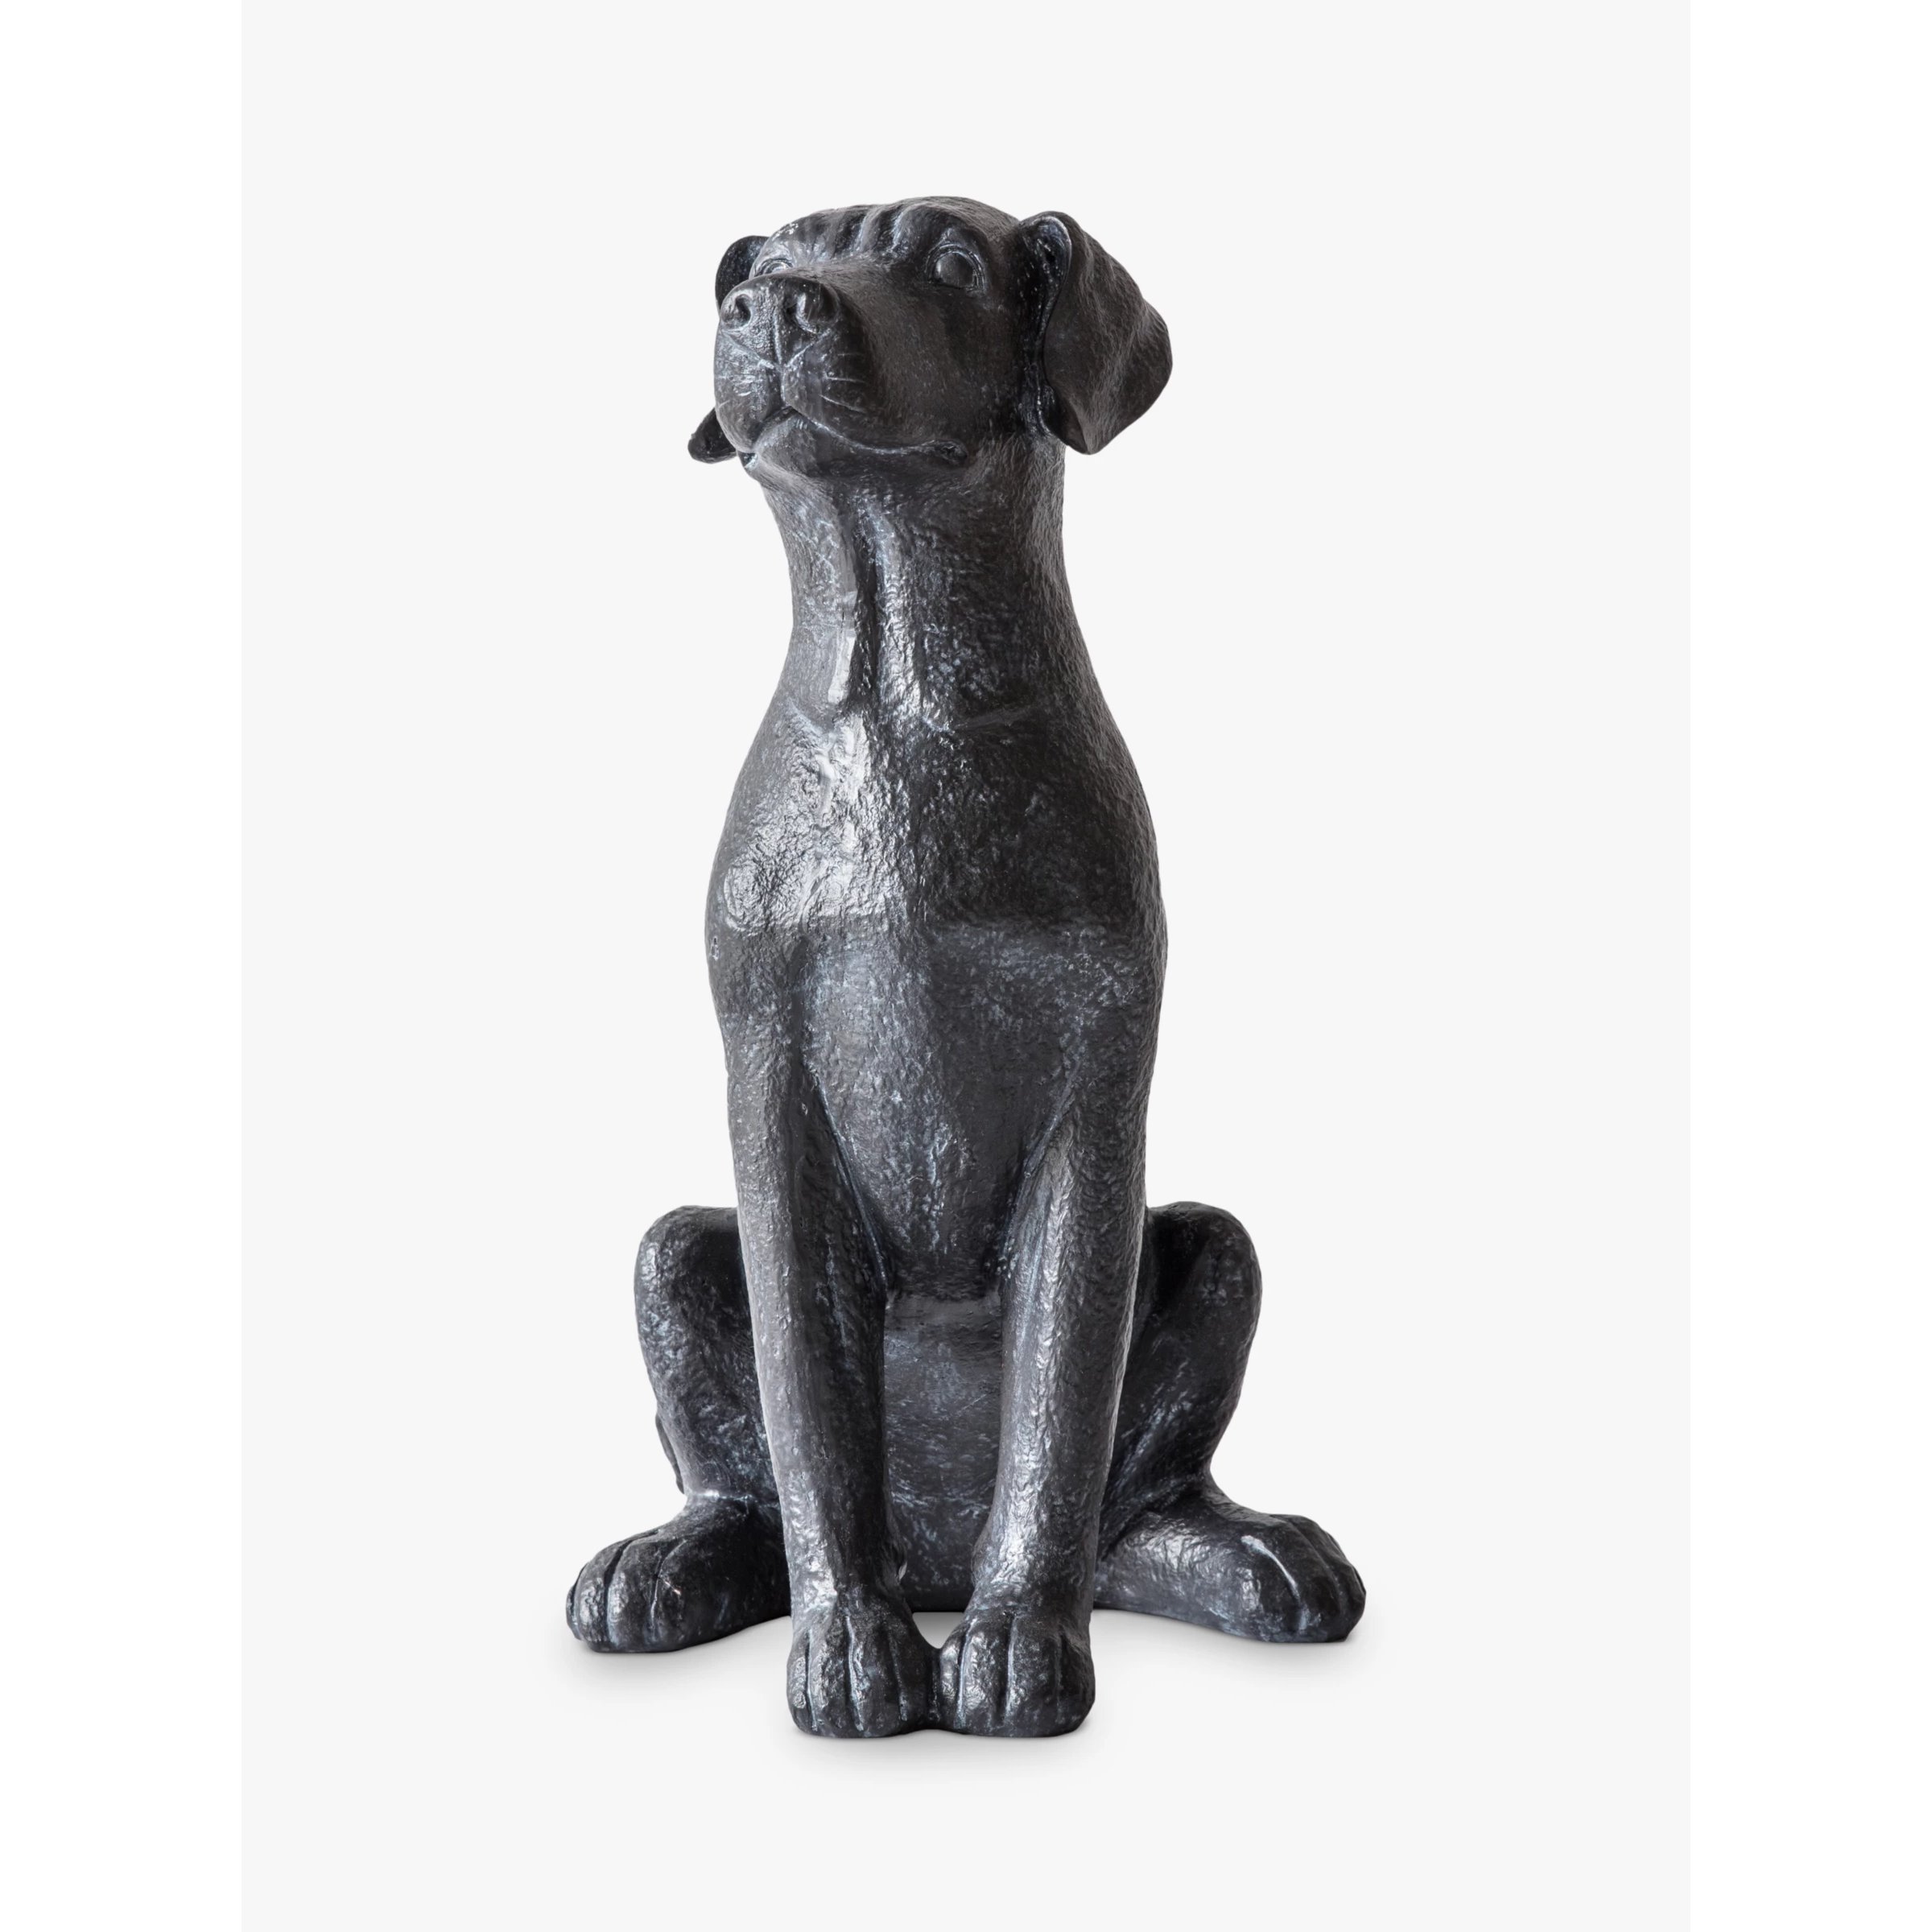 John Lewis & Partners Sitting Dog Garden Sculpture, H22cm, Grey